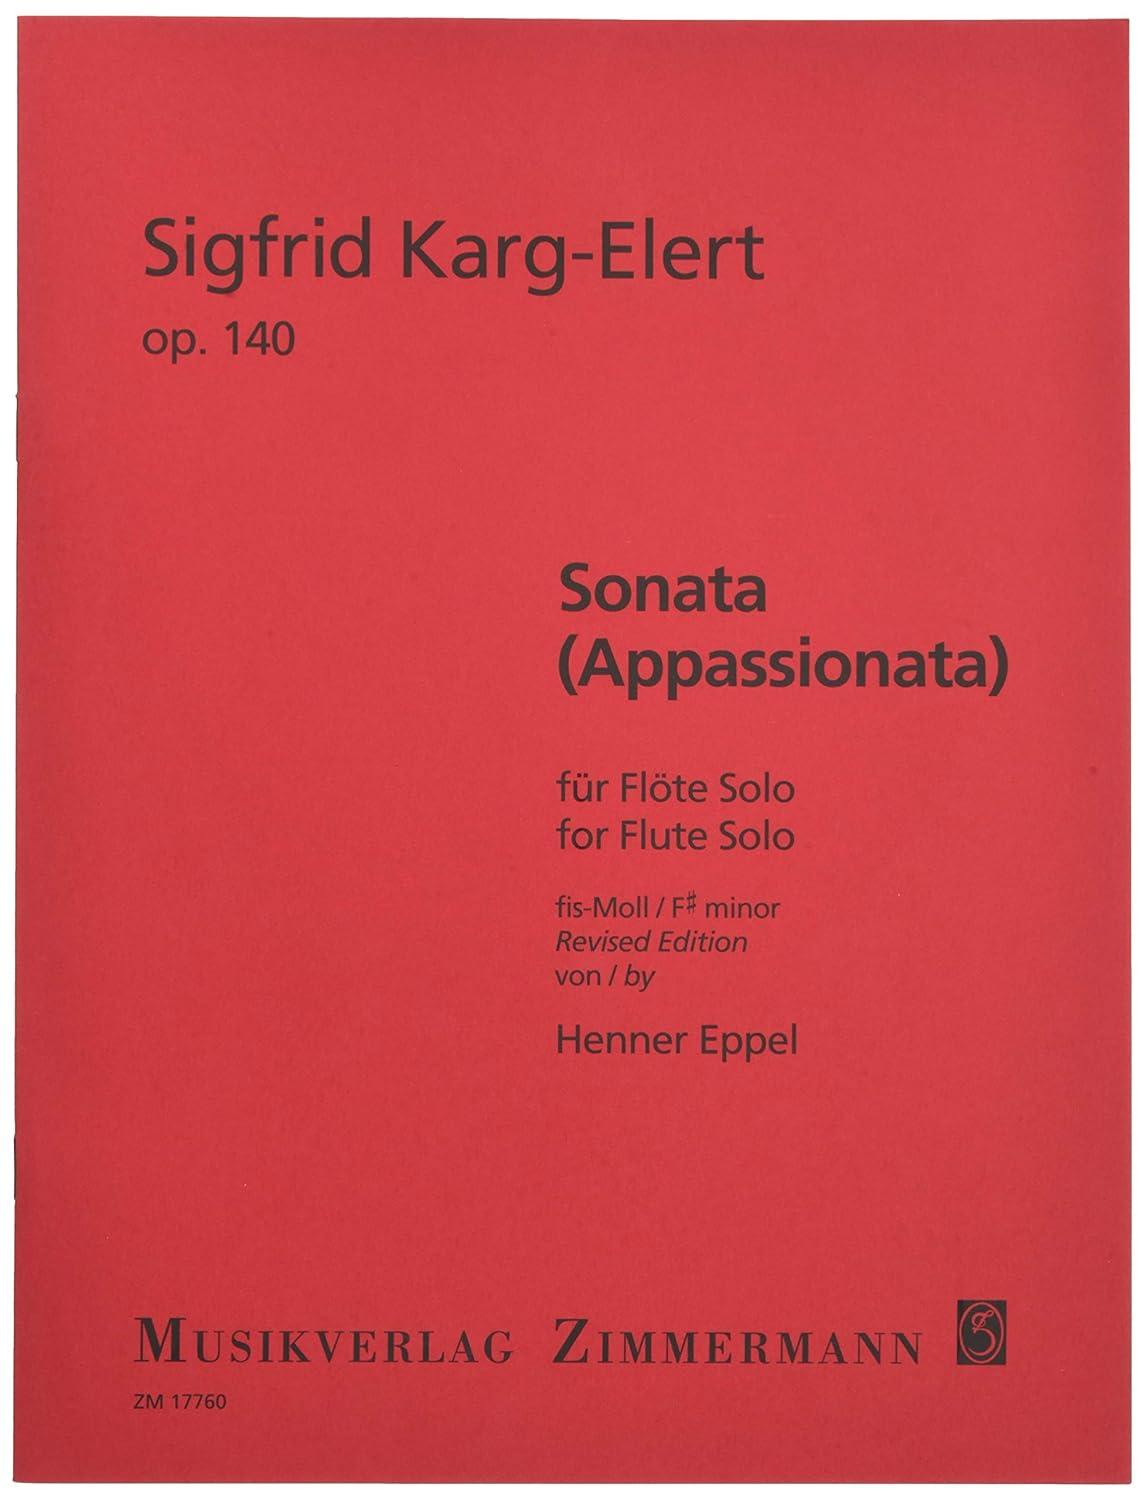 Sonata - Sigfrid Karg-Elert | Suono Flauti